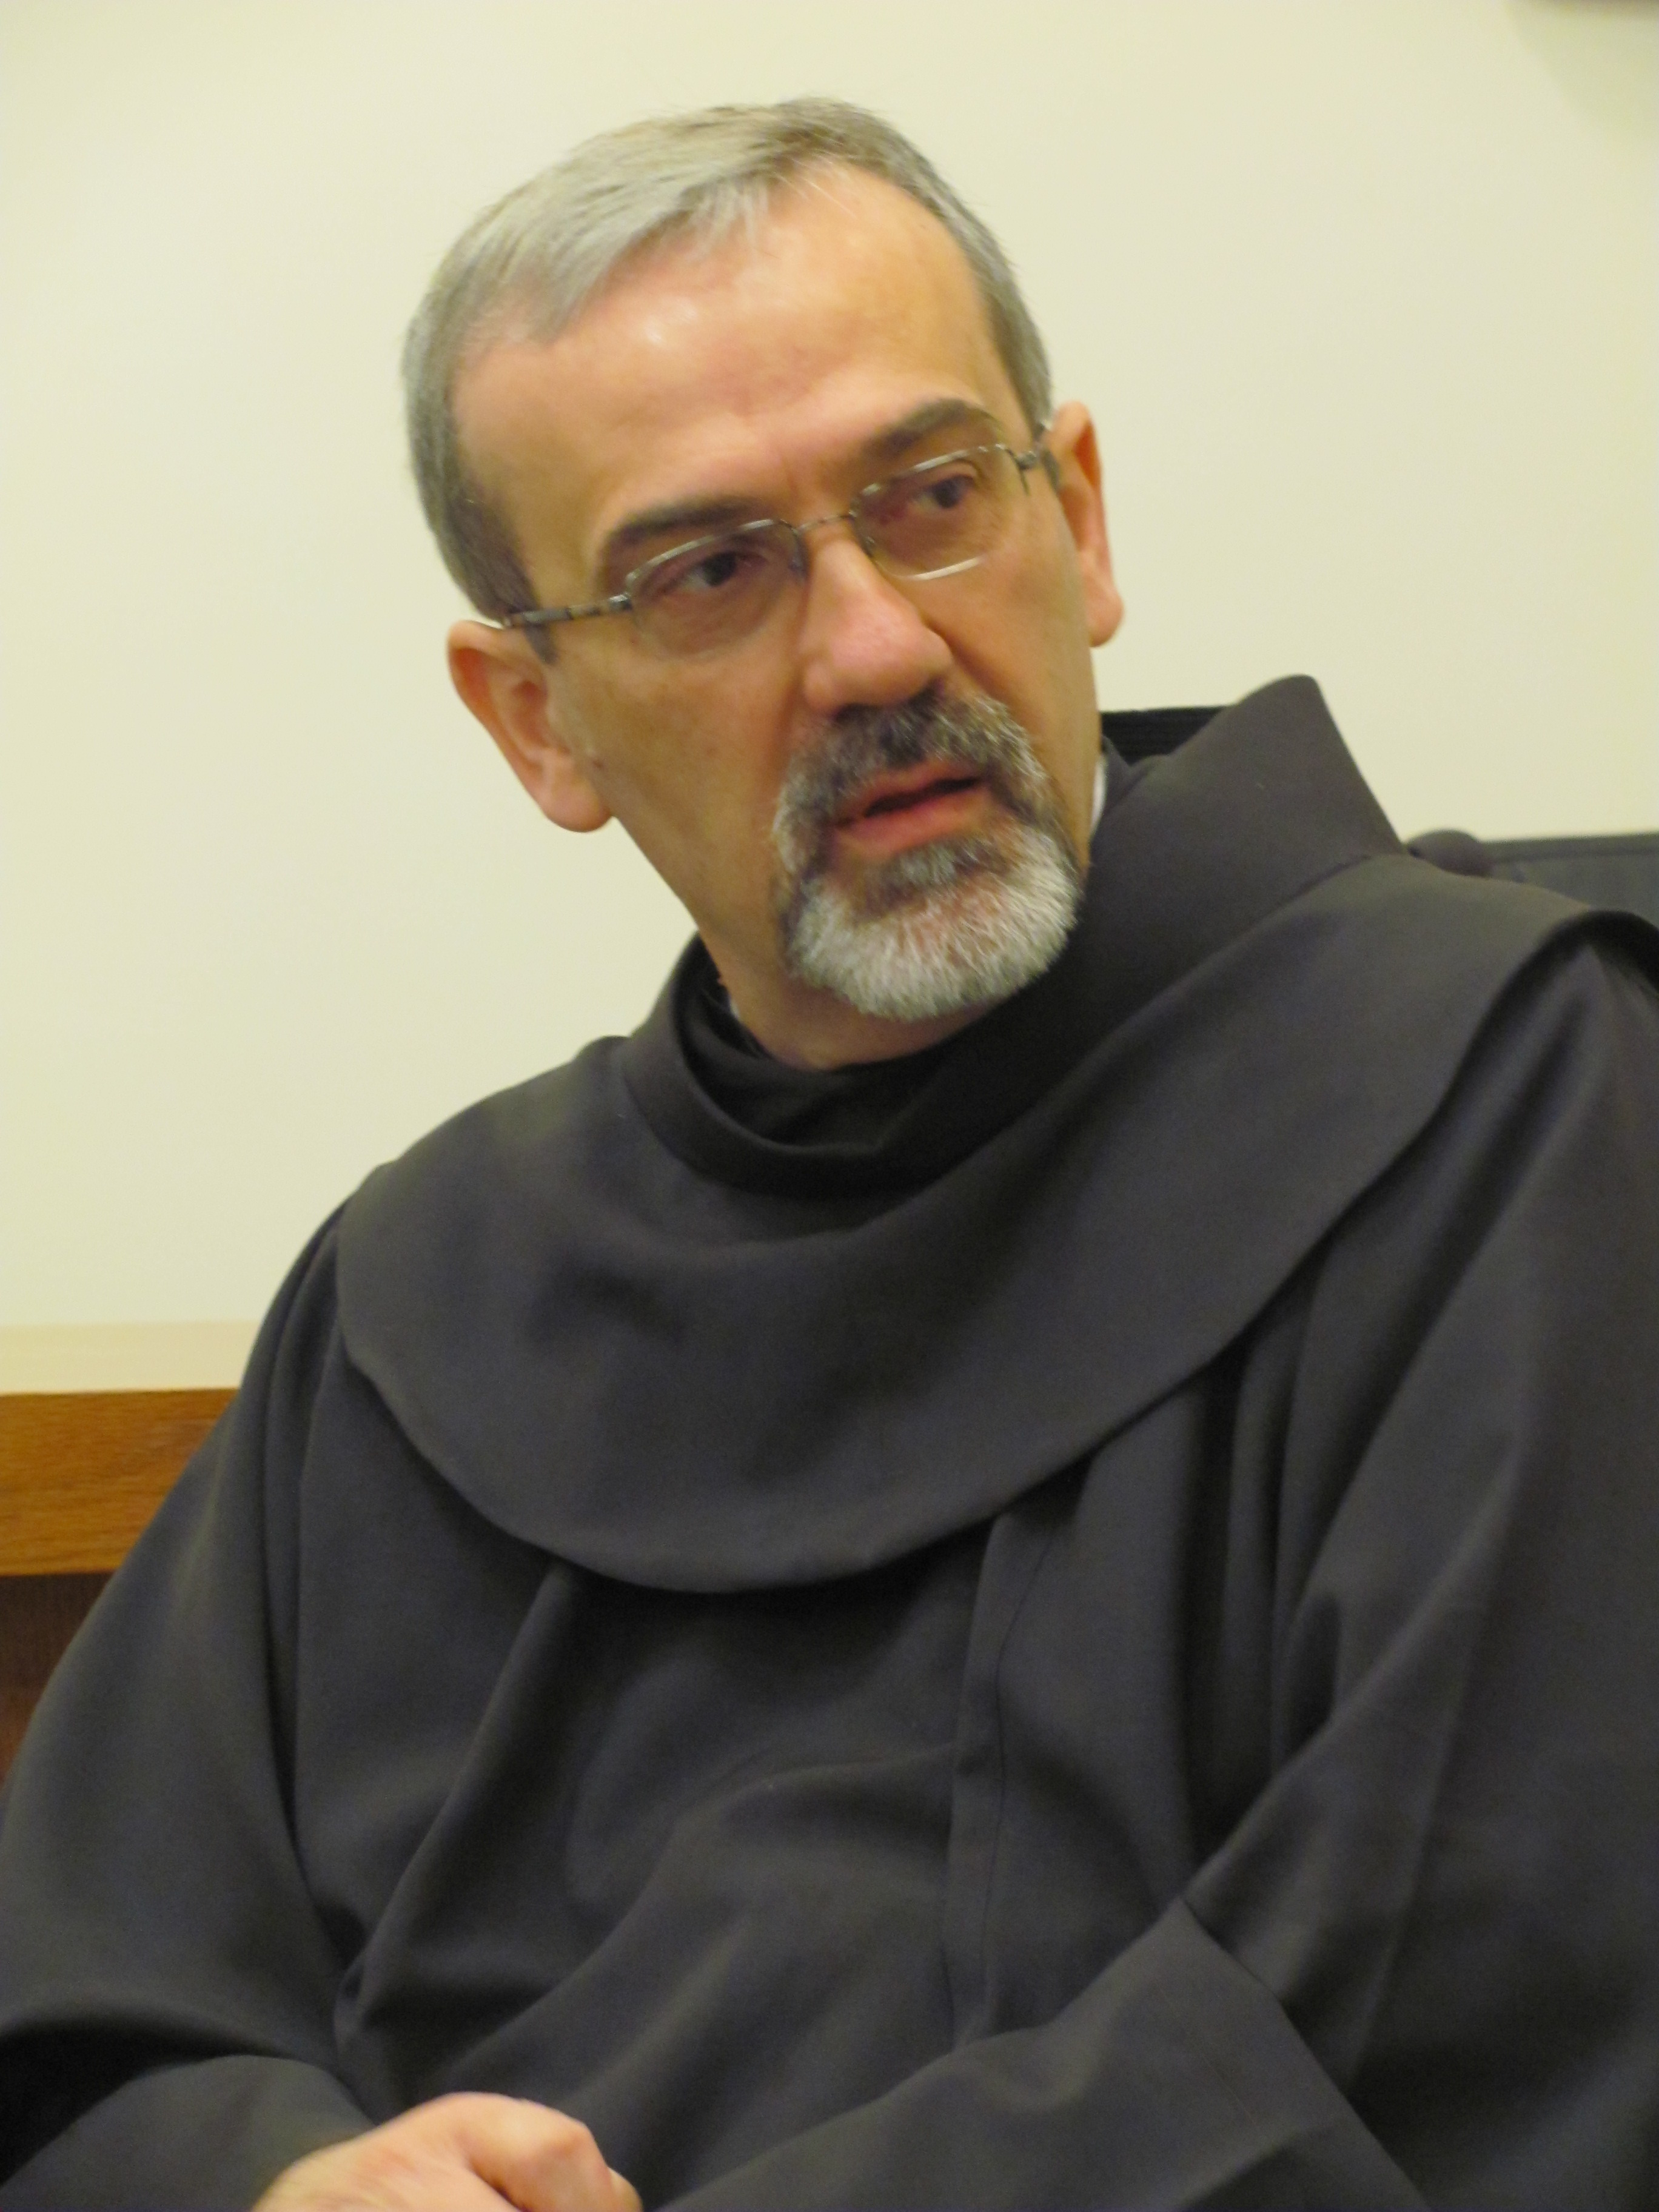 Archbishop Pizzaballa